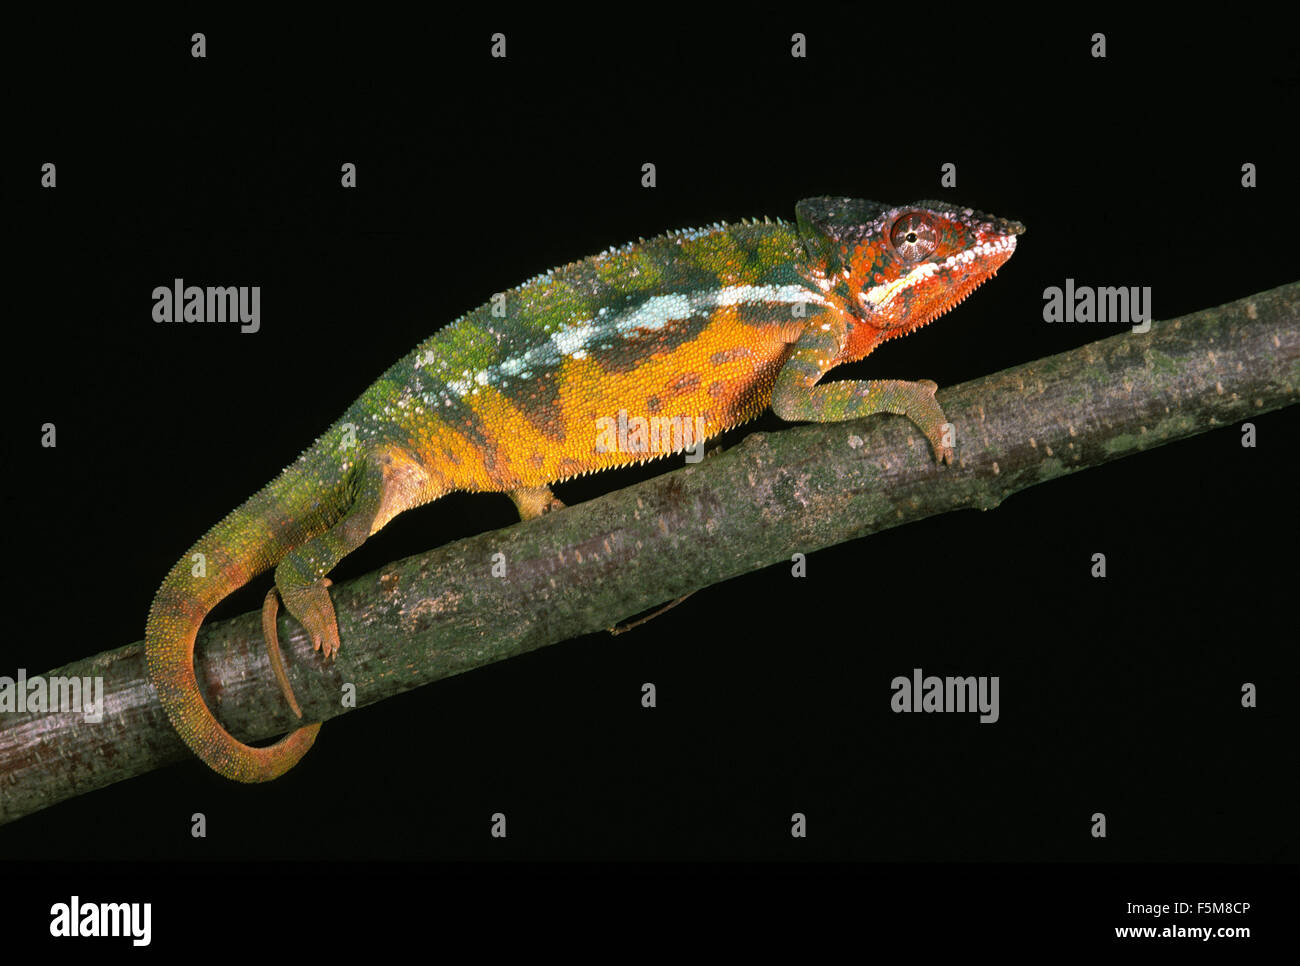 Jewelled Chameleon or Carpet Chameleon, furcifer lateralis, Adult against Black Background Stock Photo